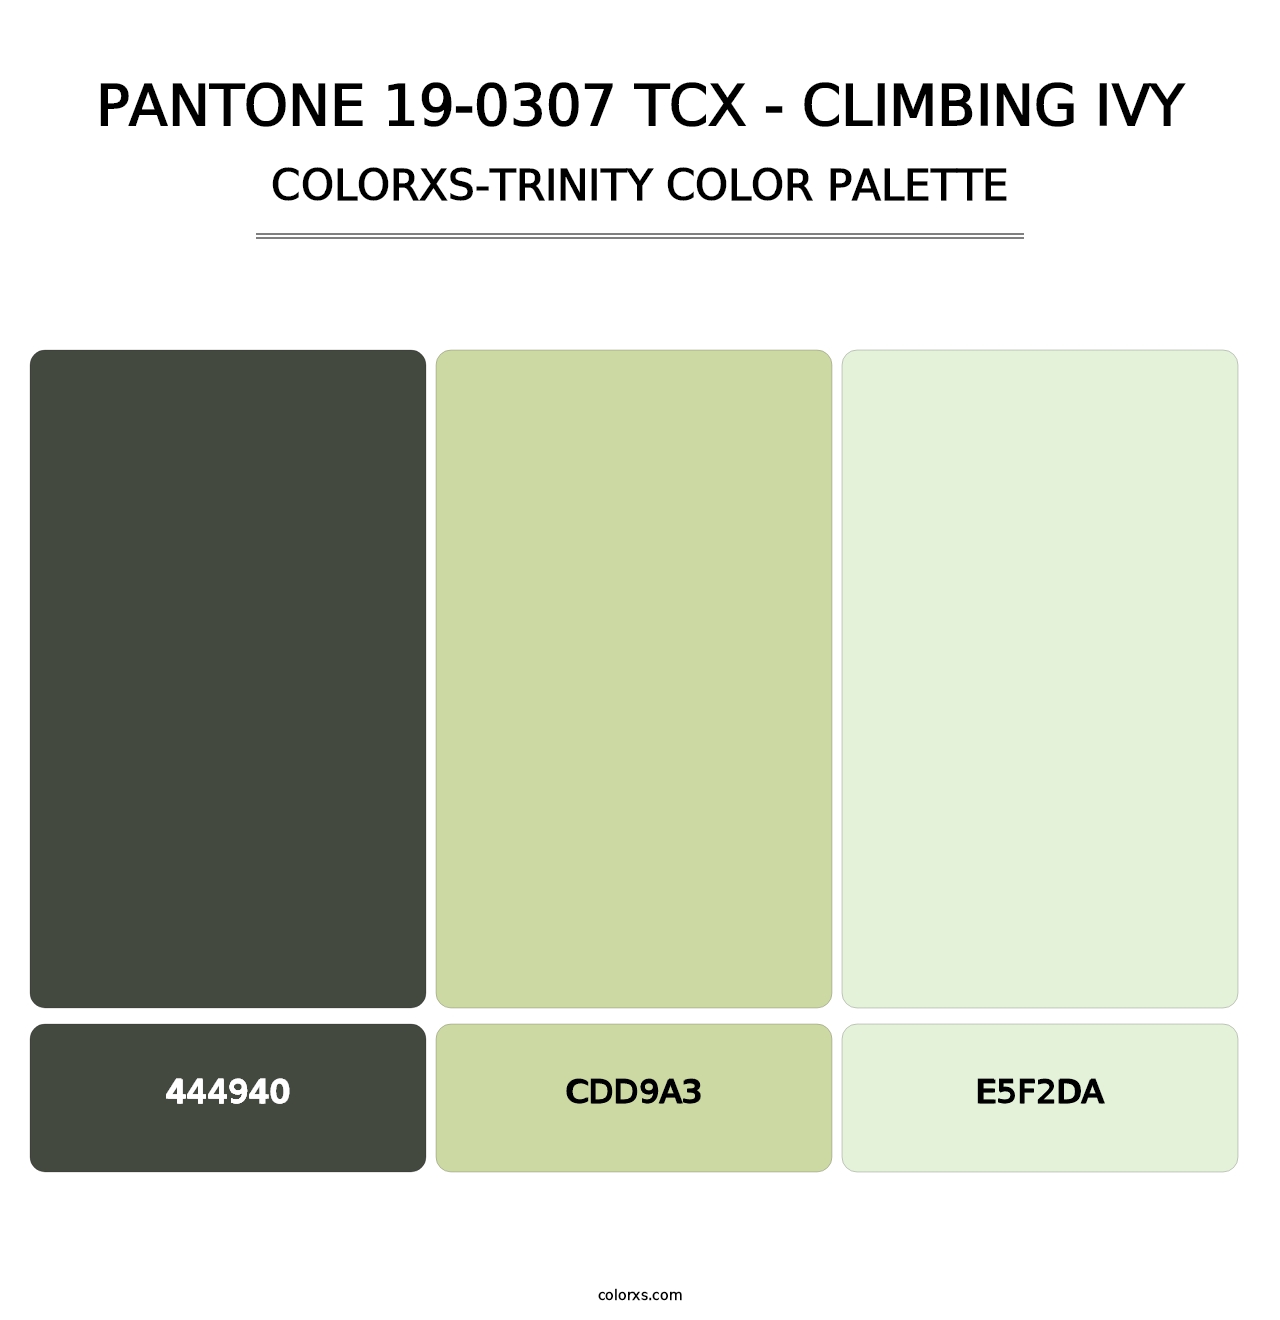 PANTONE 19-0307 TCX - Climbing Ivy - Colorxs Trinity Palette